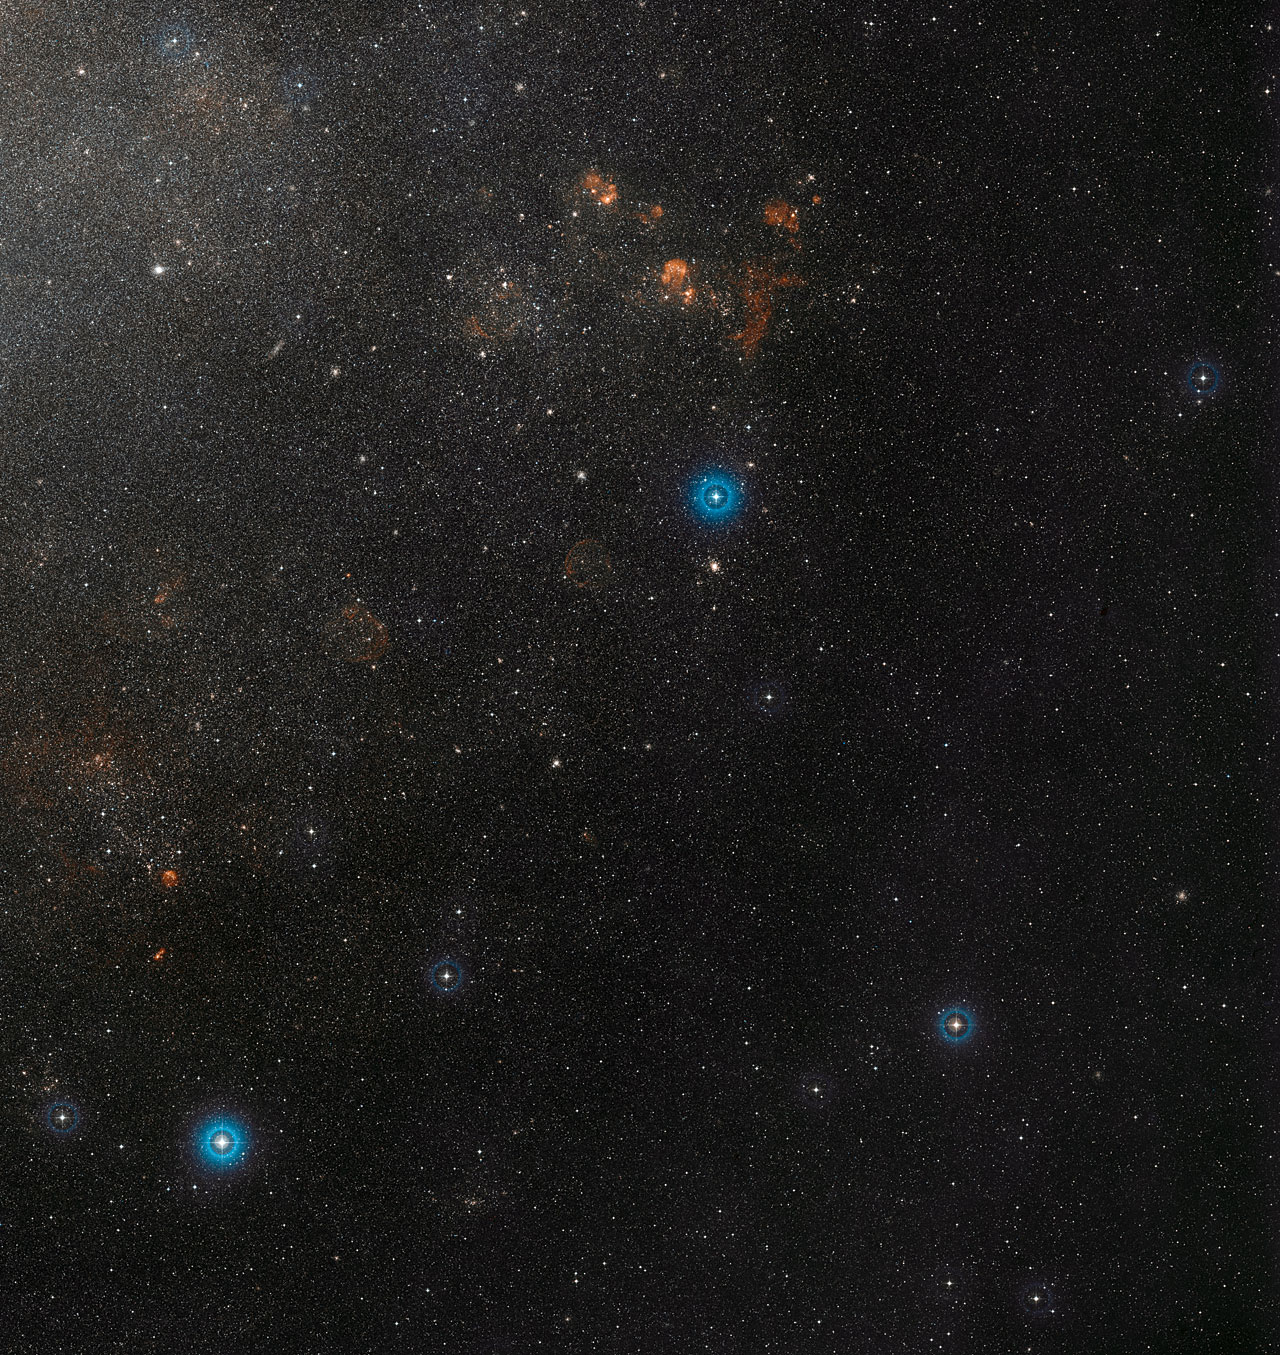 OGLE-LMC-CEP0227 (double star)